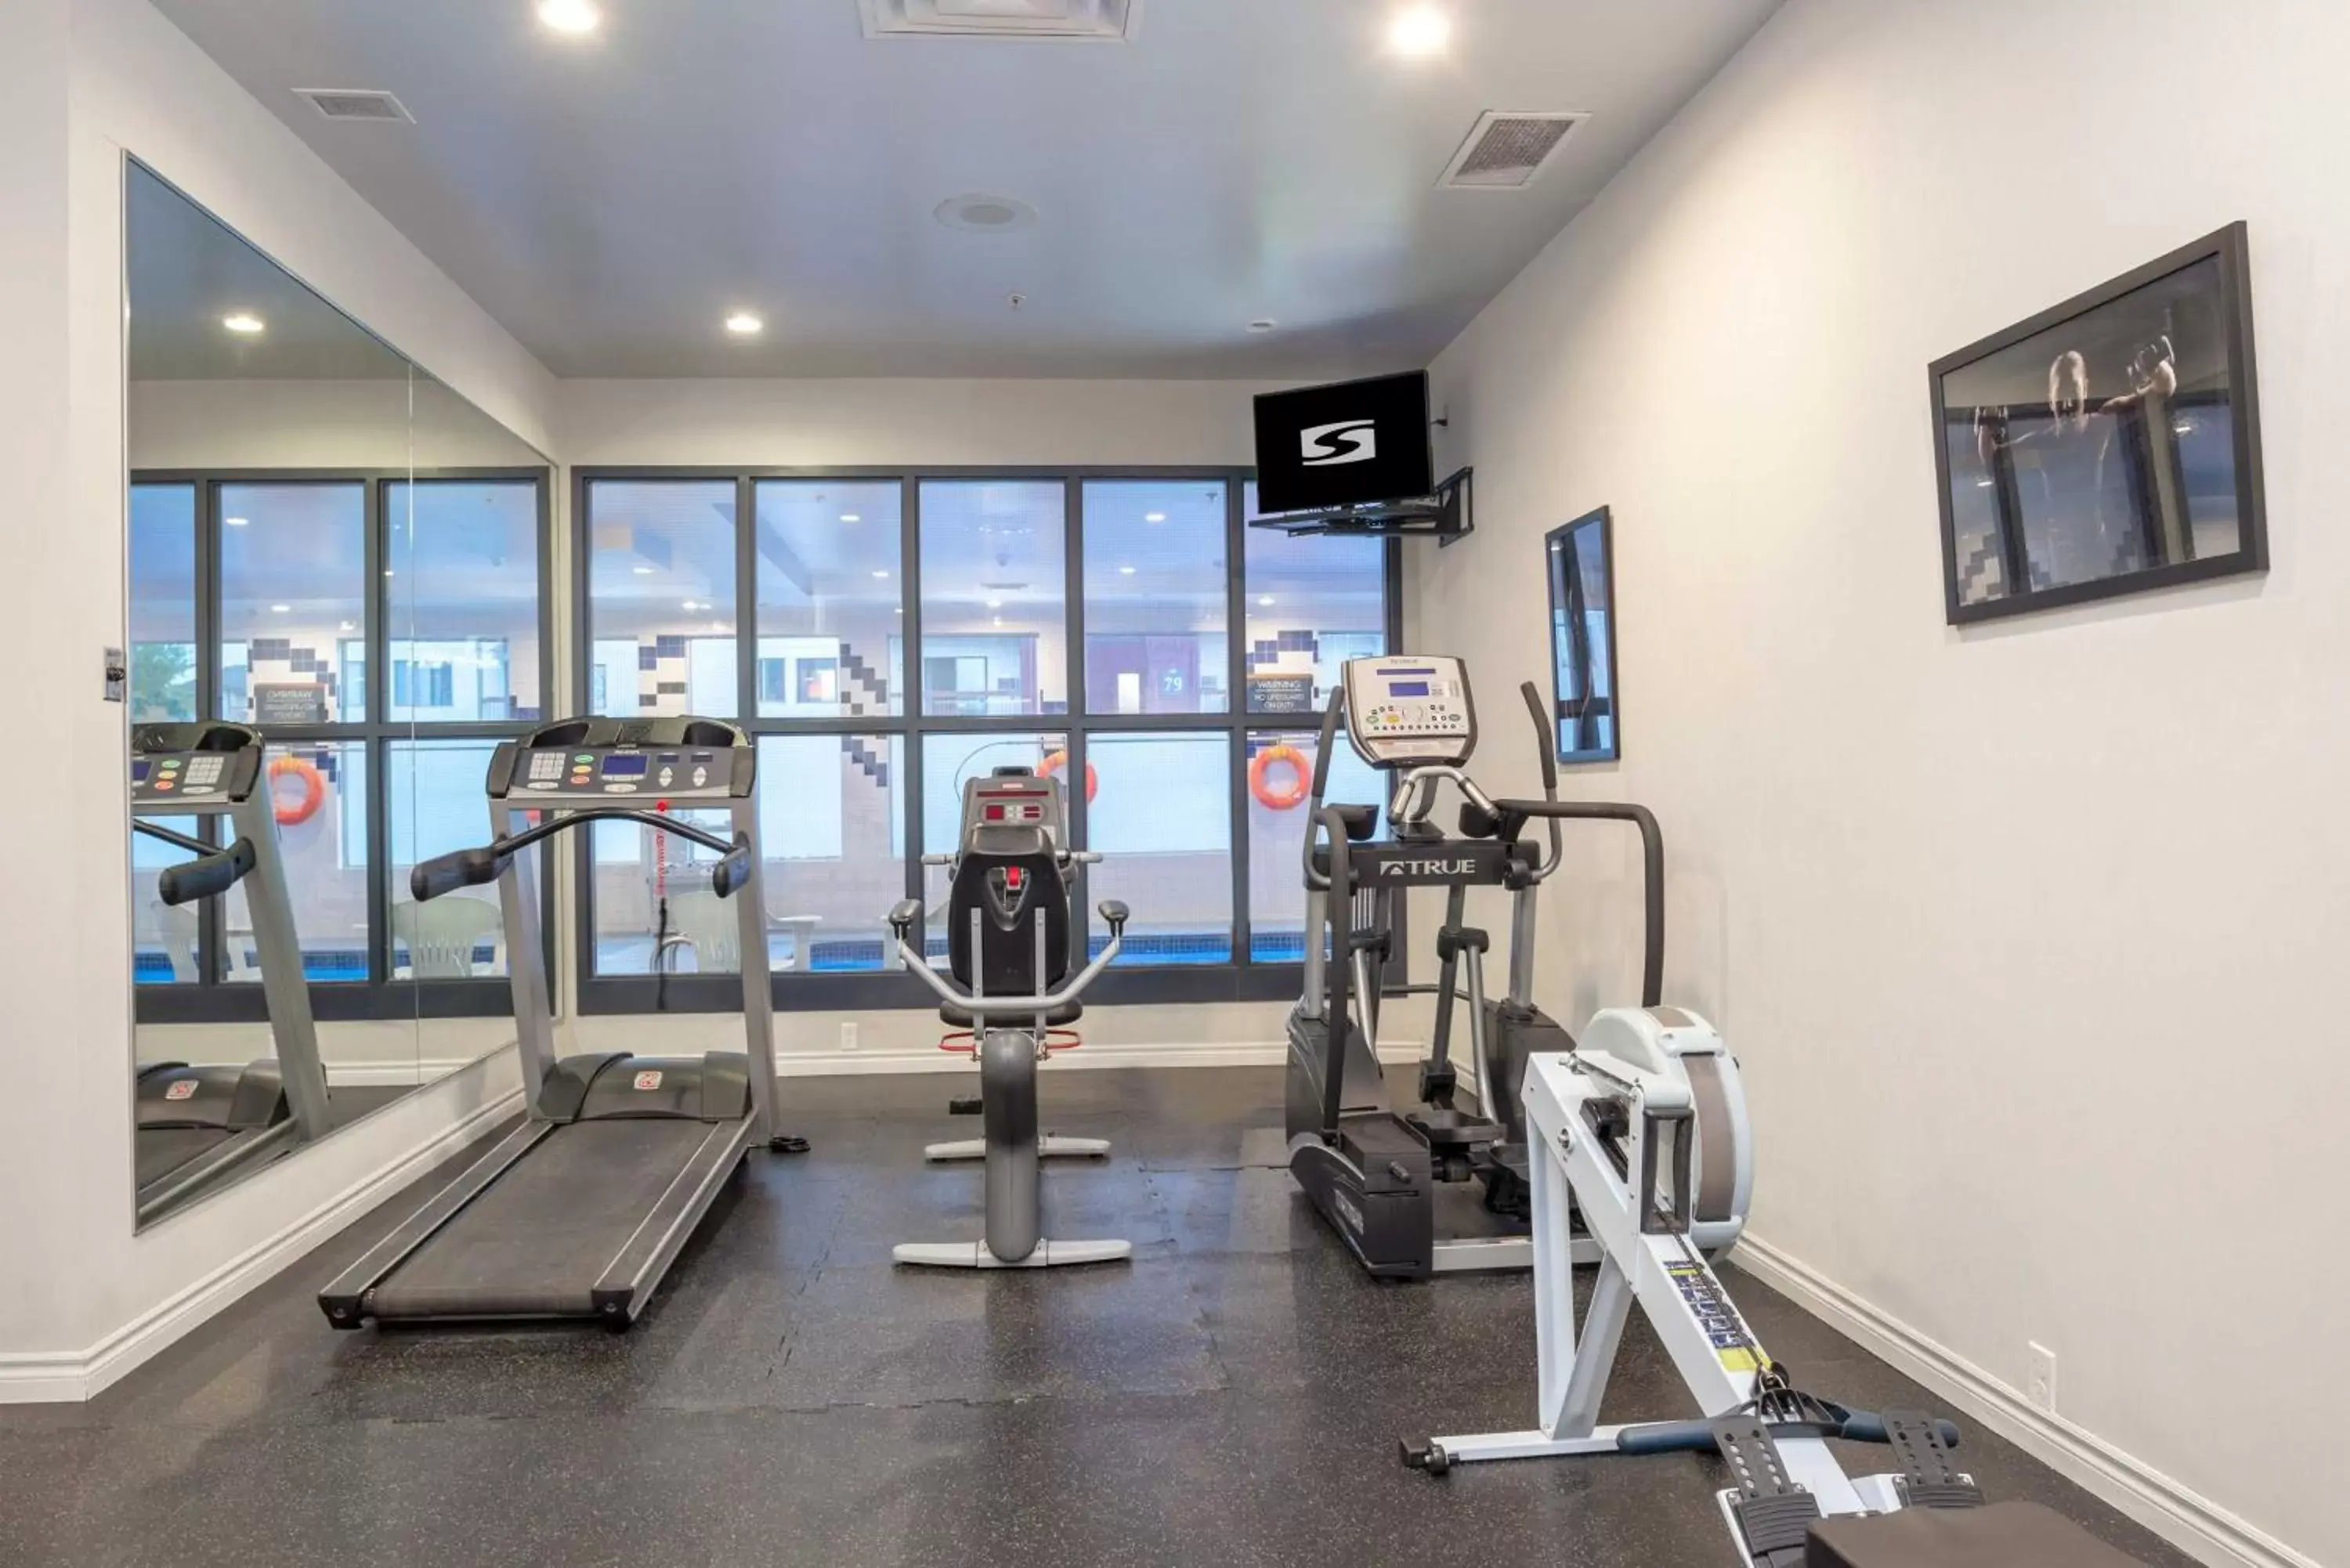 Fitness centre/facilities, Fitness Center/Facilities in Sandman Hotel & Suites Regina